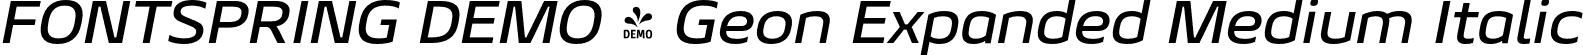 FONTSPRING DEMO - Geon Expanded Medium Italic font - Fontspring-DEMO-geonexpanded-mediumit.otf